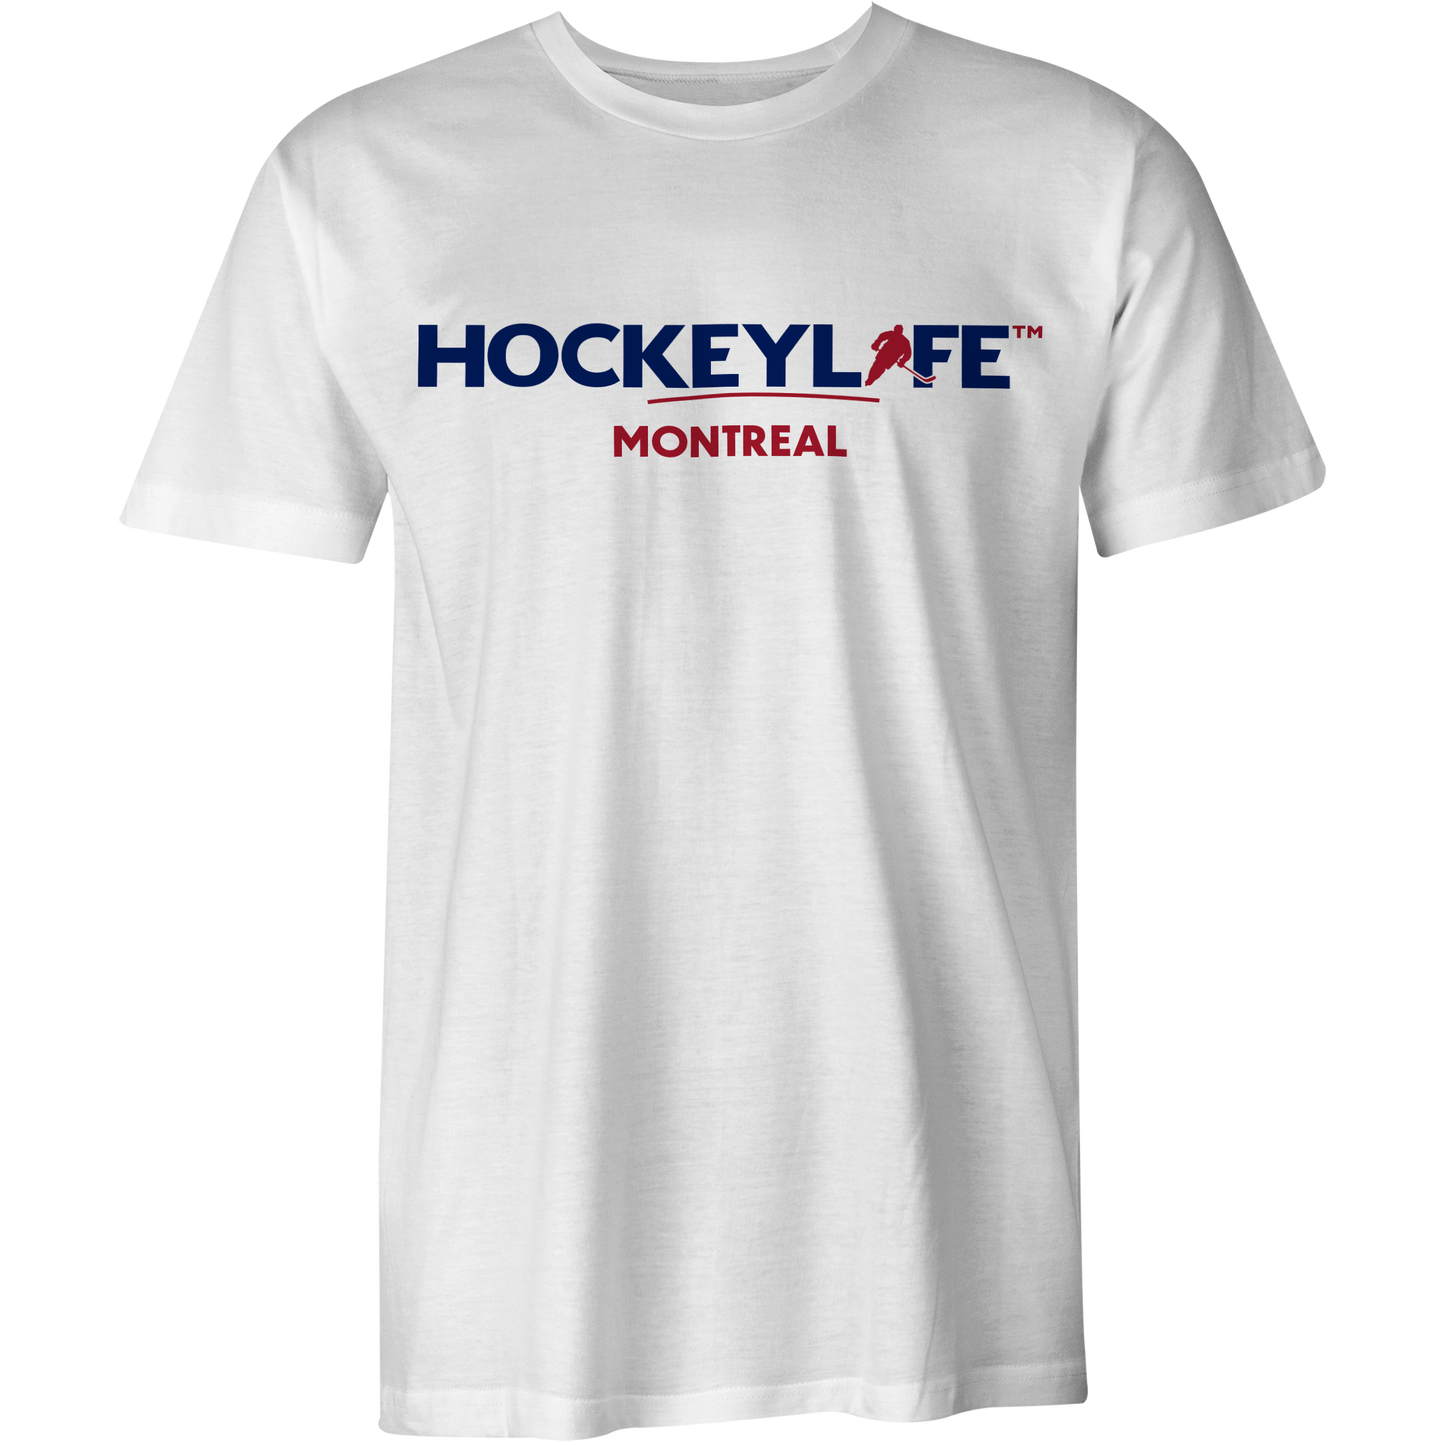 HockeyLife Montreal Tee Shirt